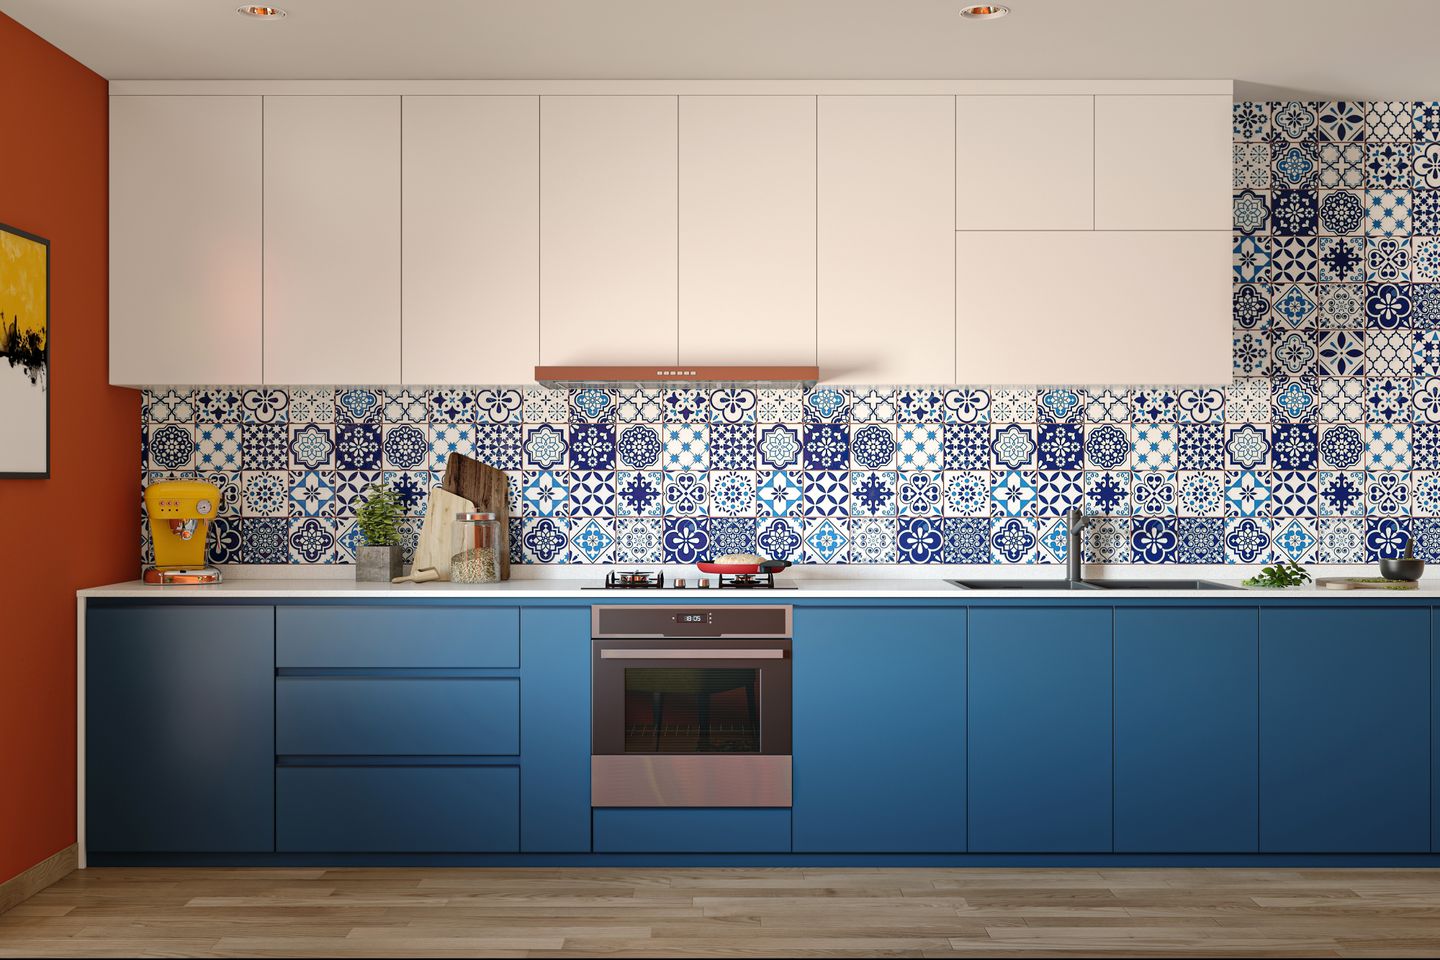 Blue Patterned Accent Wall Contemporary Kitchen Design Idea - Livspace